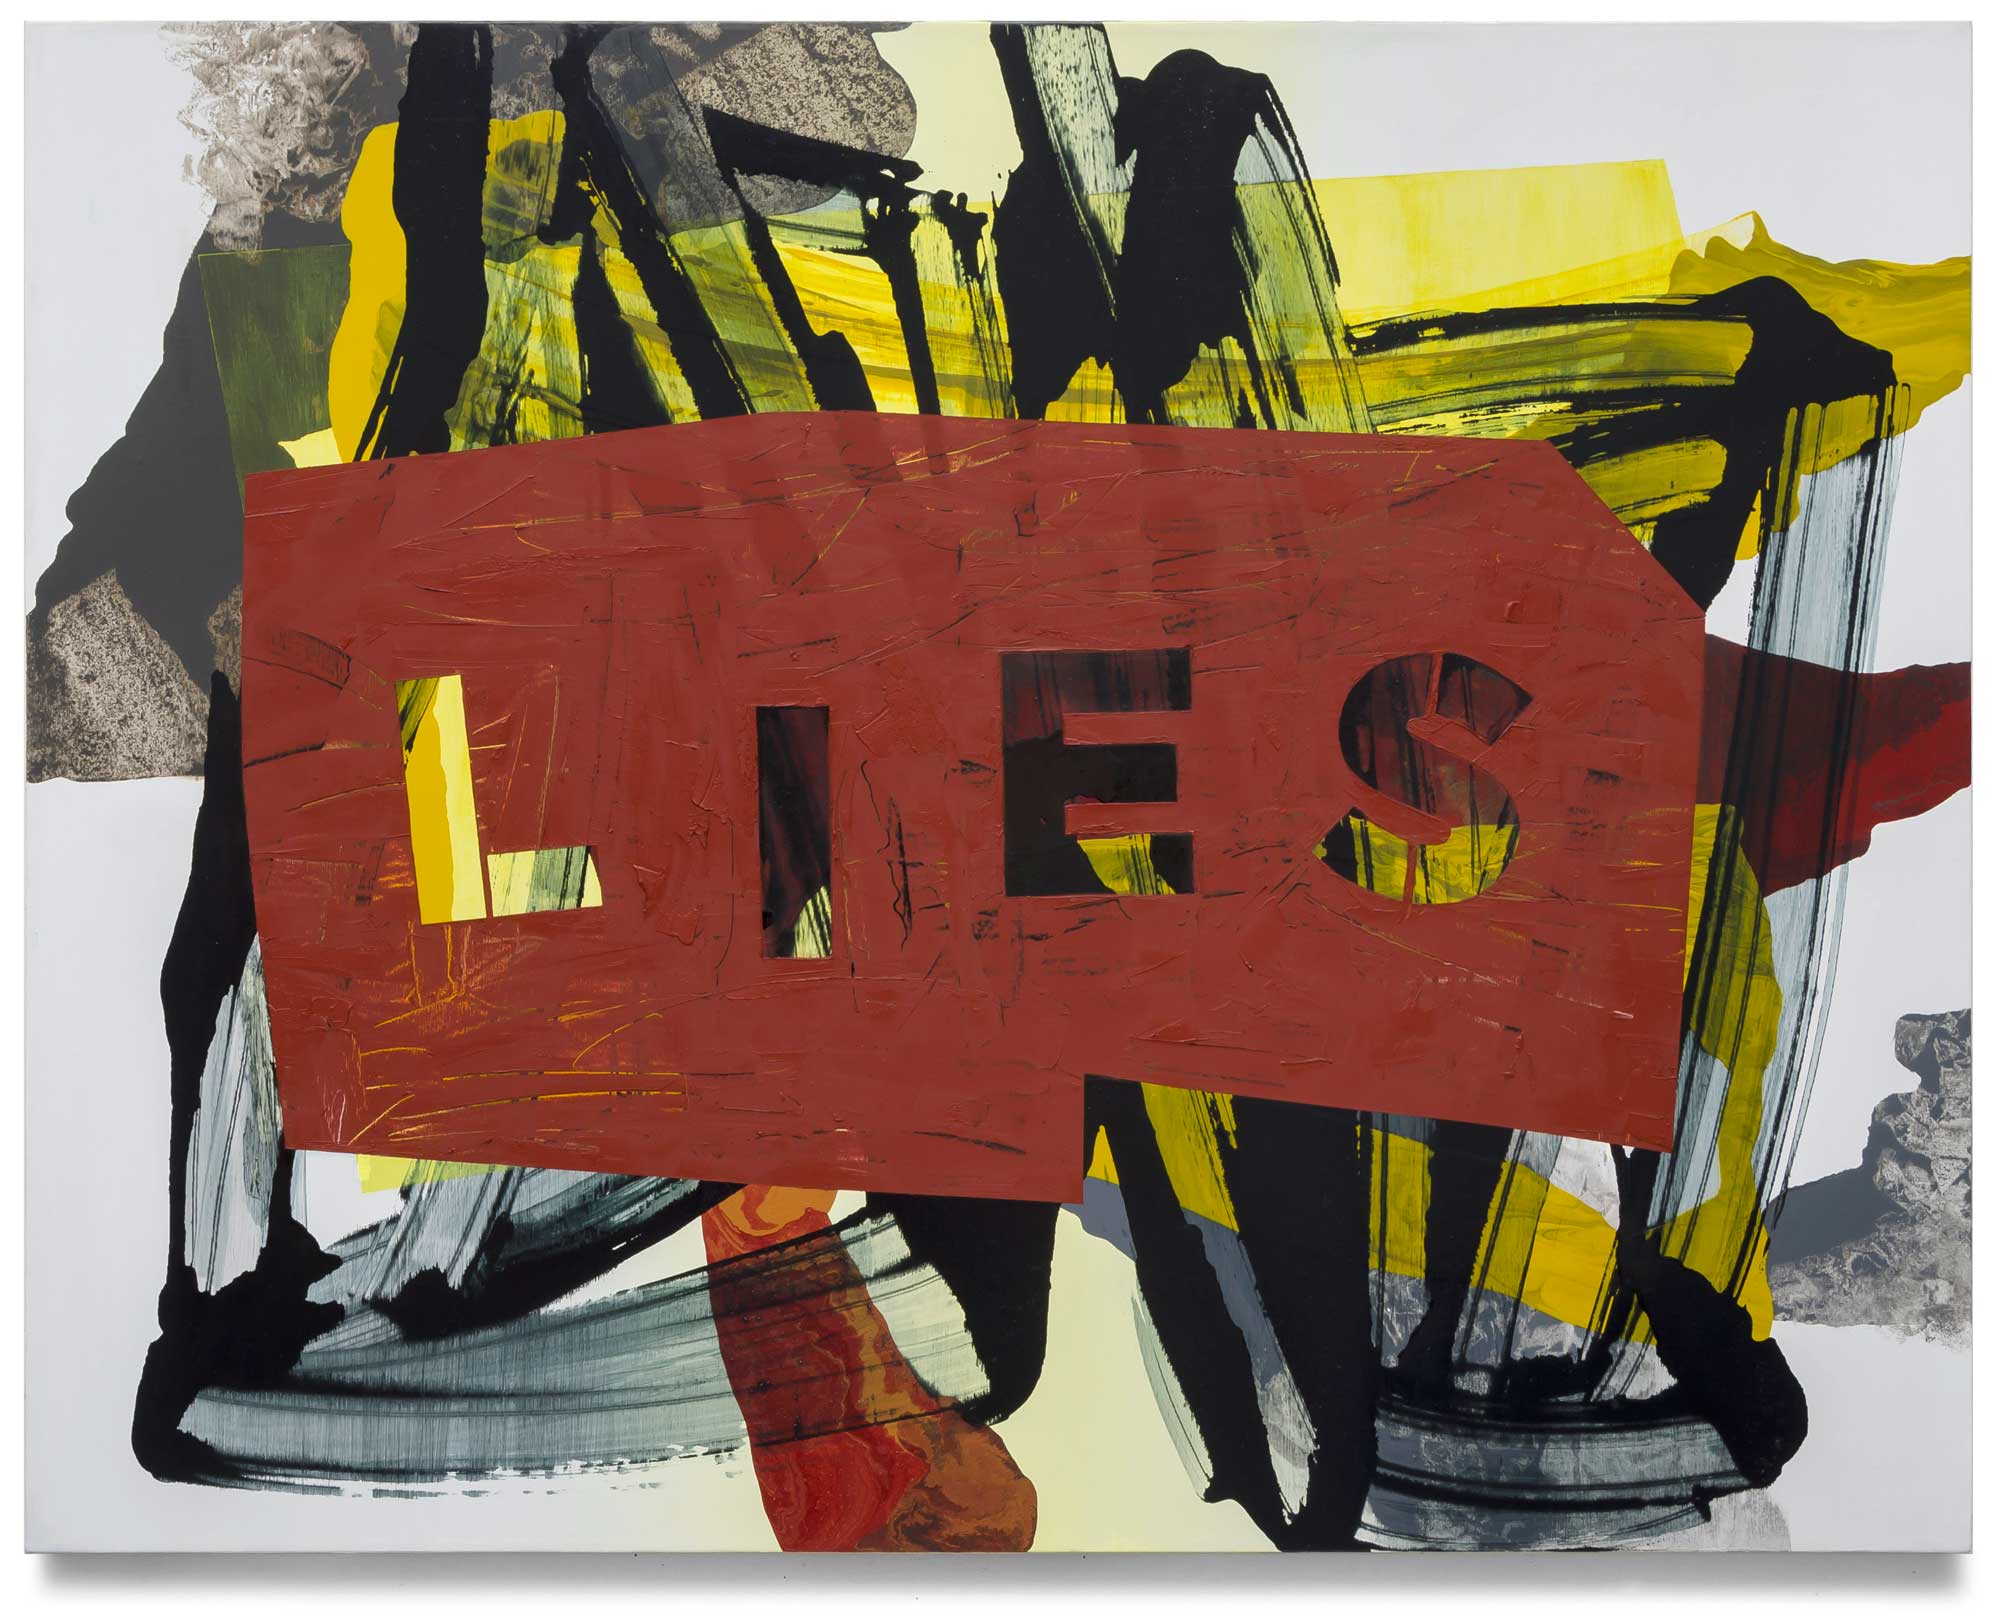 Lies-oil-on-canvas-111.76 cm x 142.24 cm.